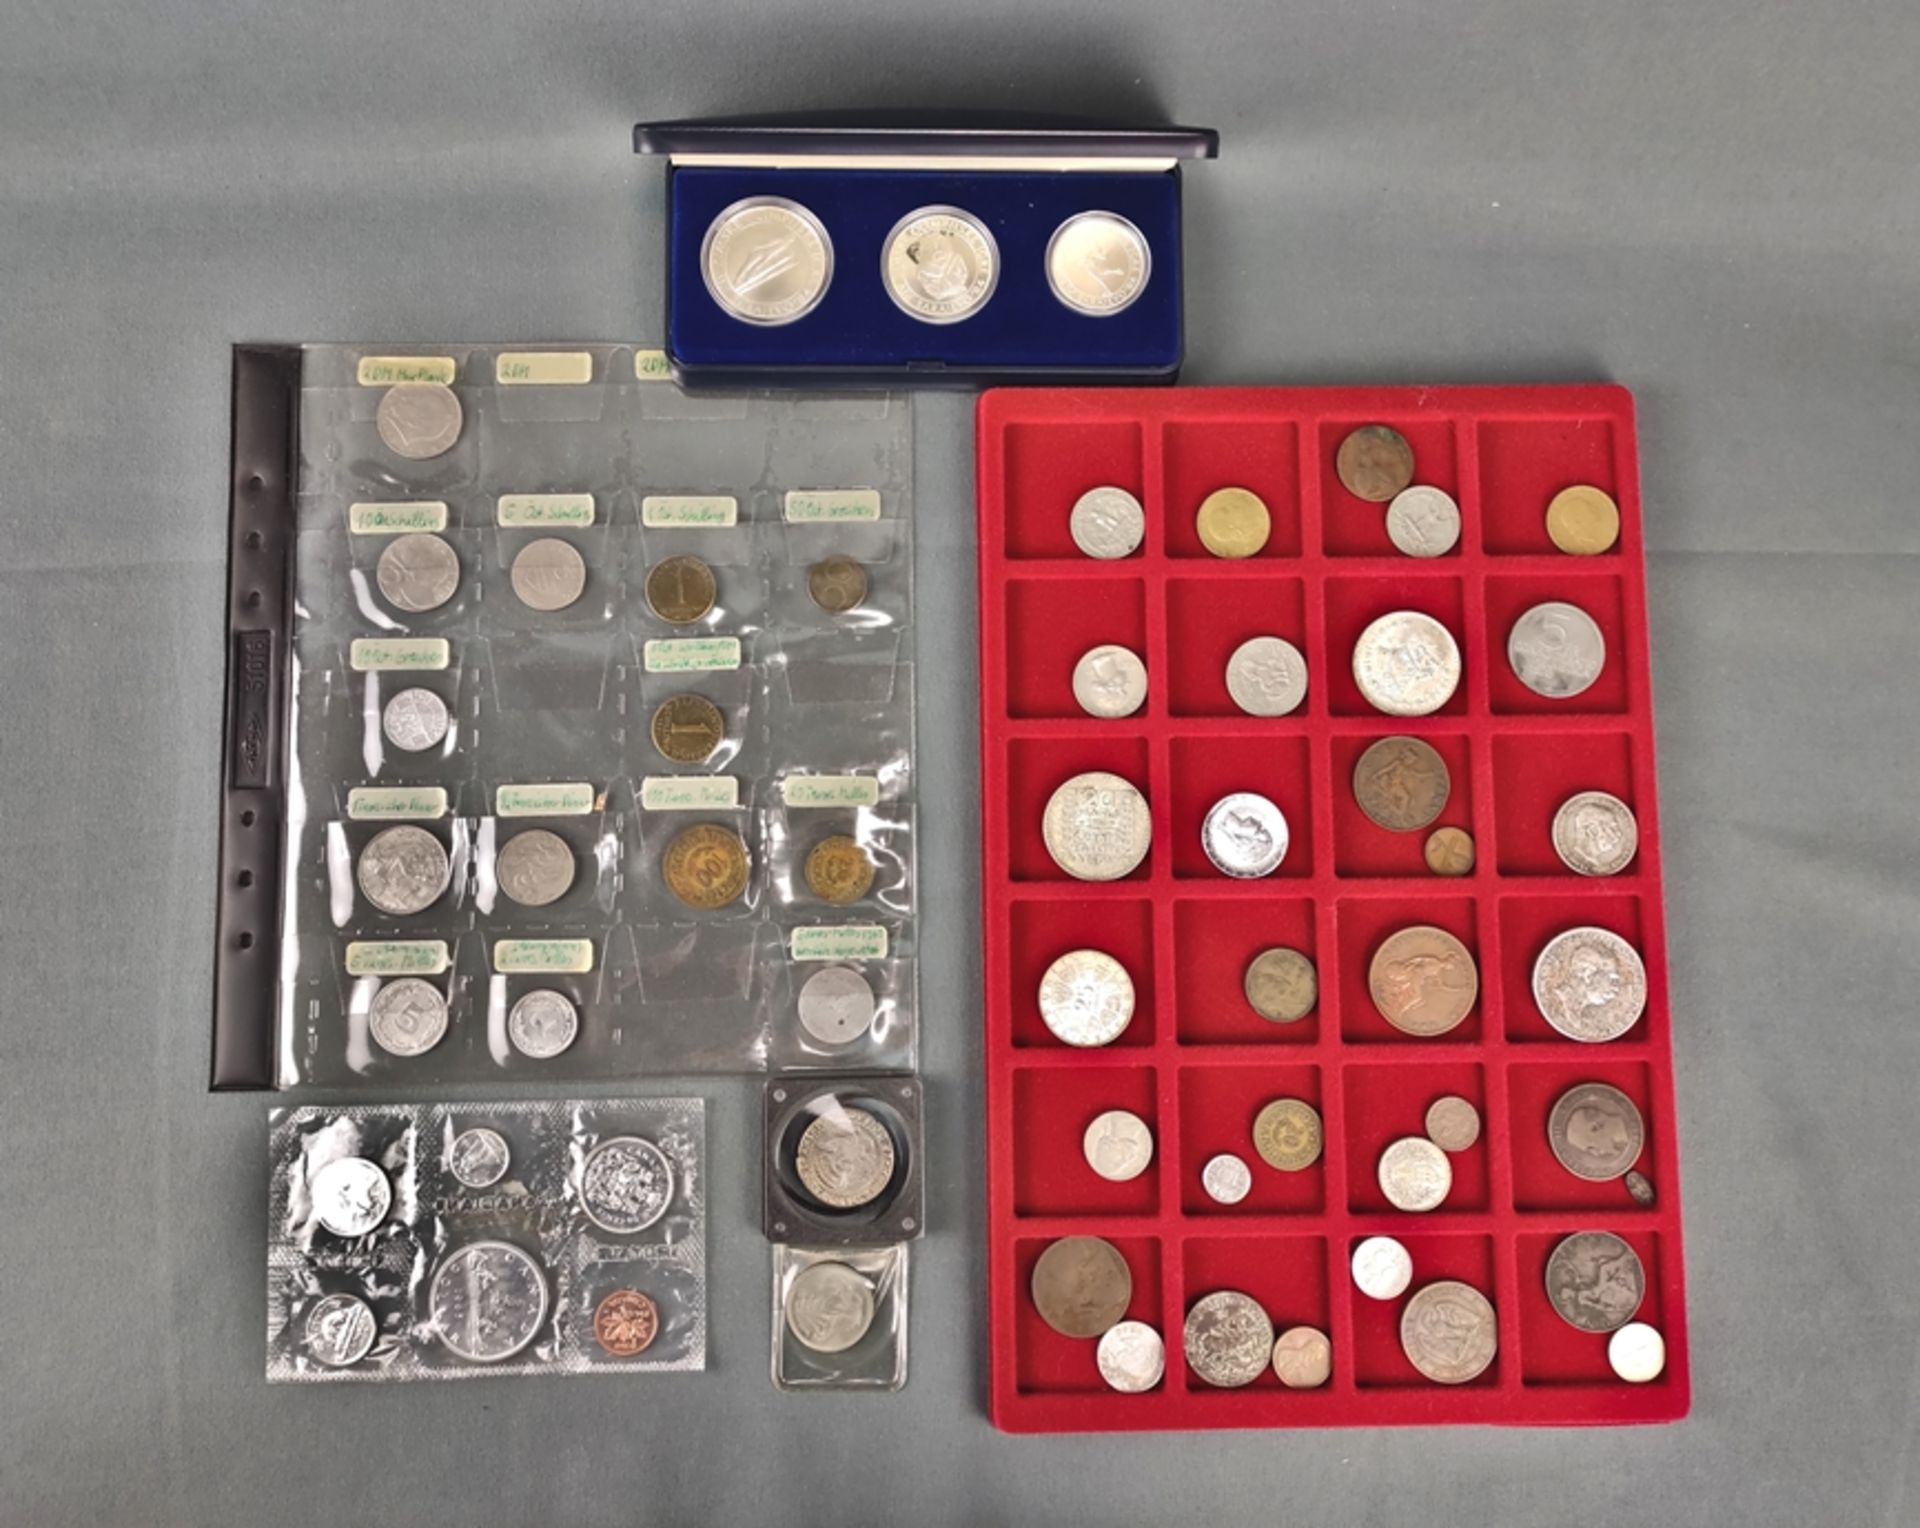 Konvolut Münzen alle Welt, bestehend unter anderem aus KMS Kanada/Canada 1965, Jugoslawien - 100, 2